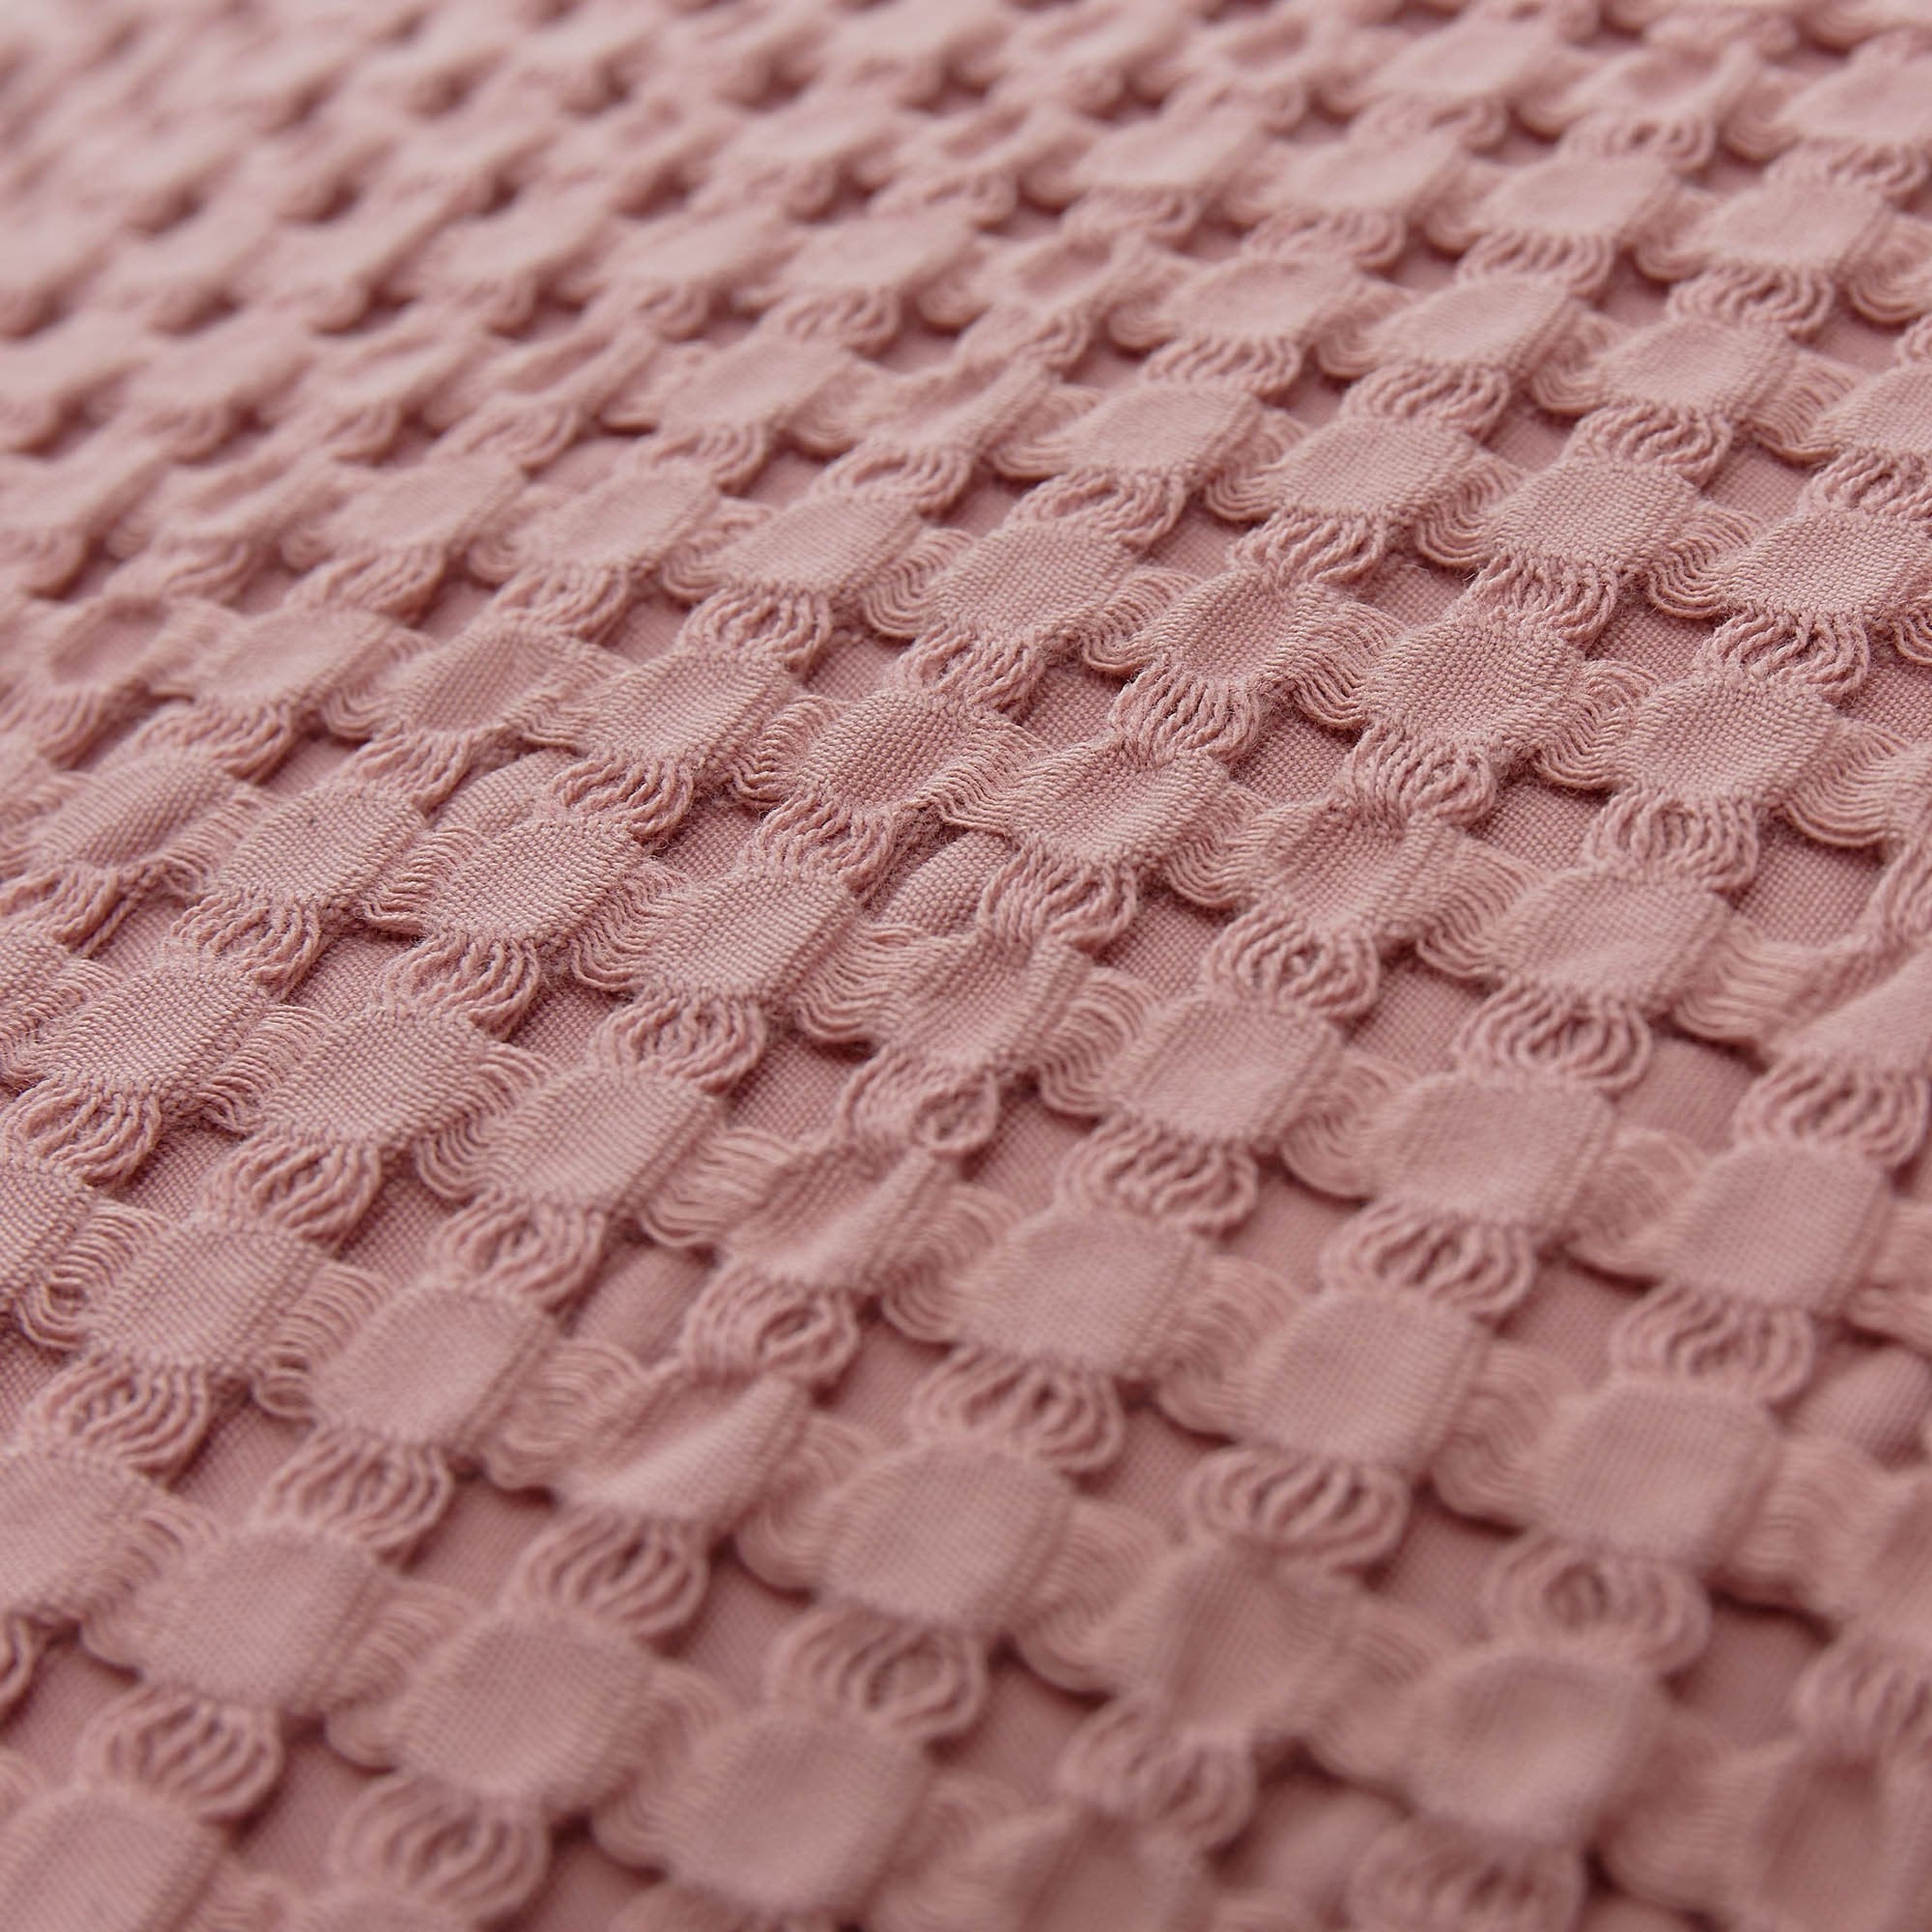 Veiros Cushion Cover [Dusty pink]